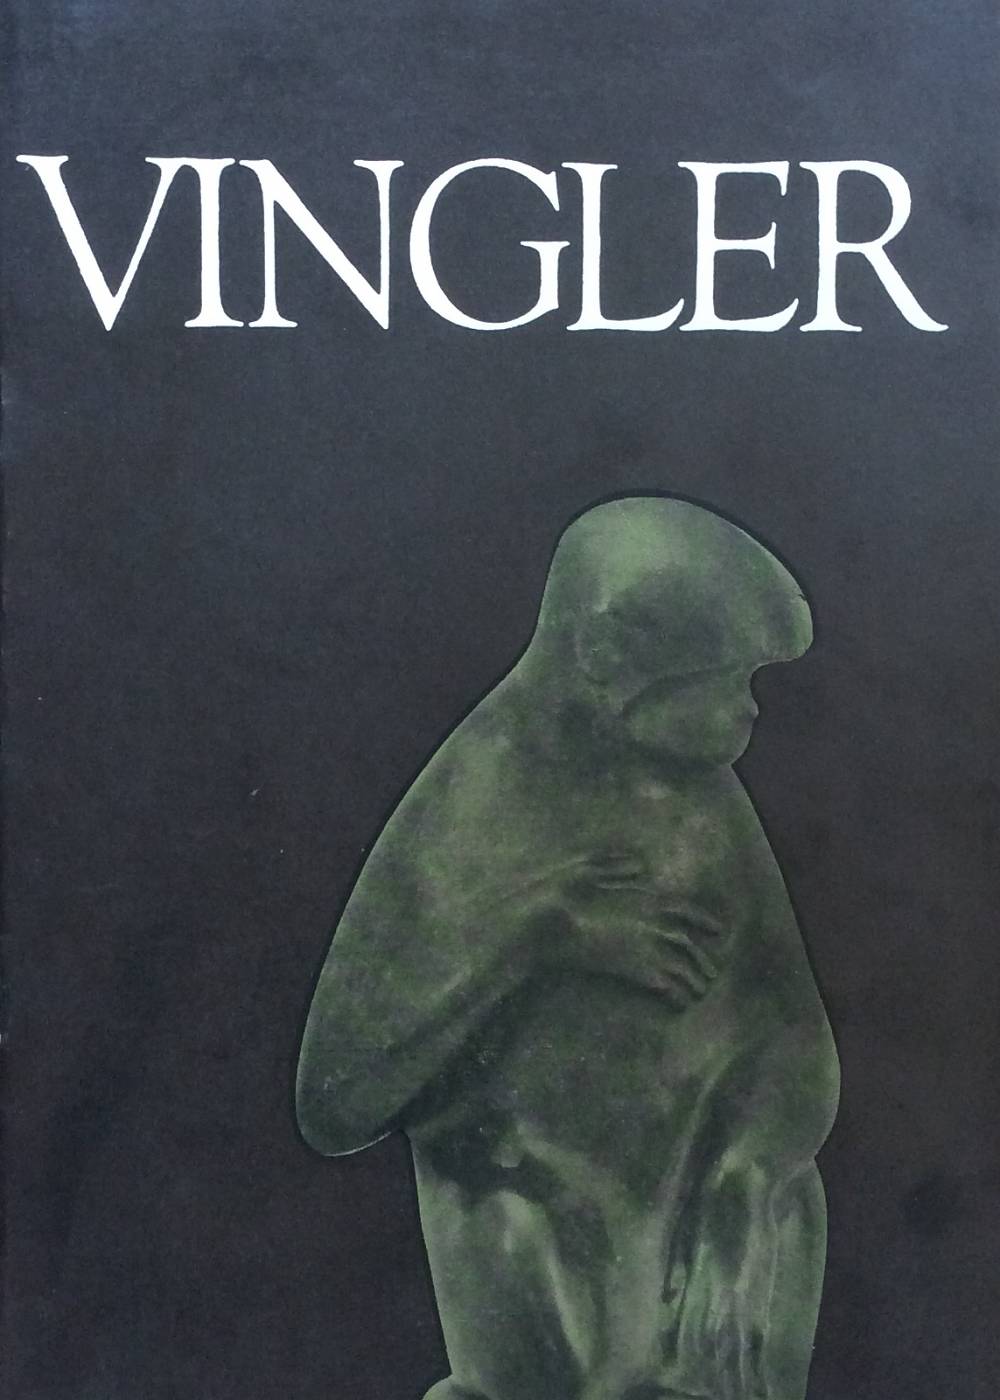 Vincenc Vingler – plastiky, kresby